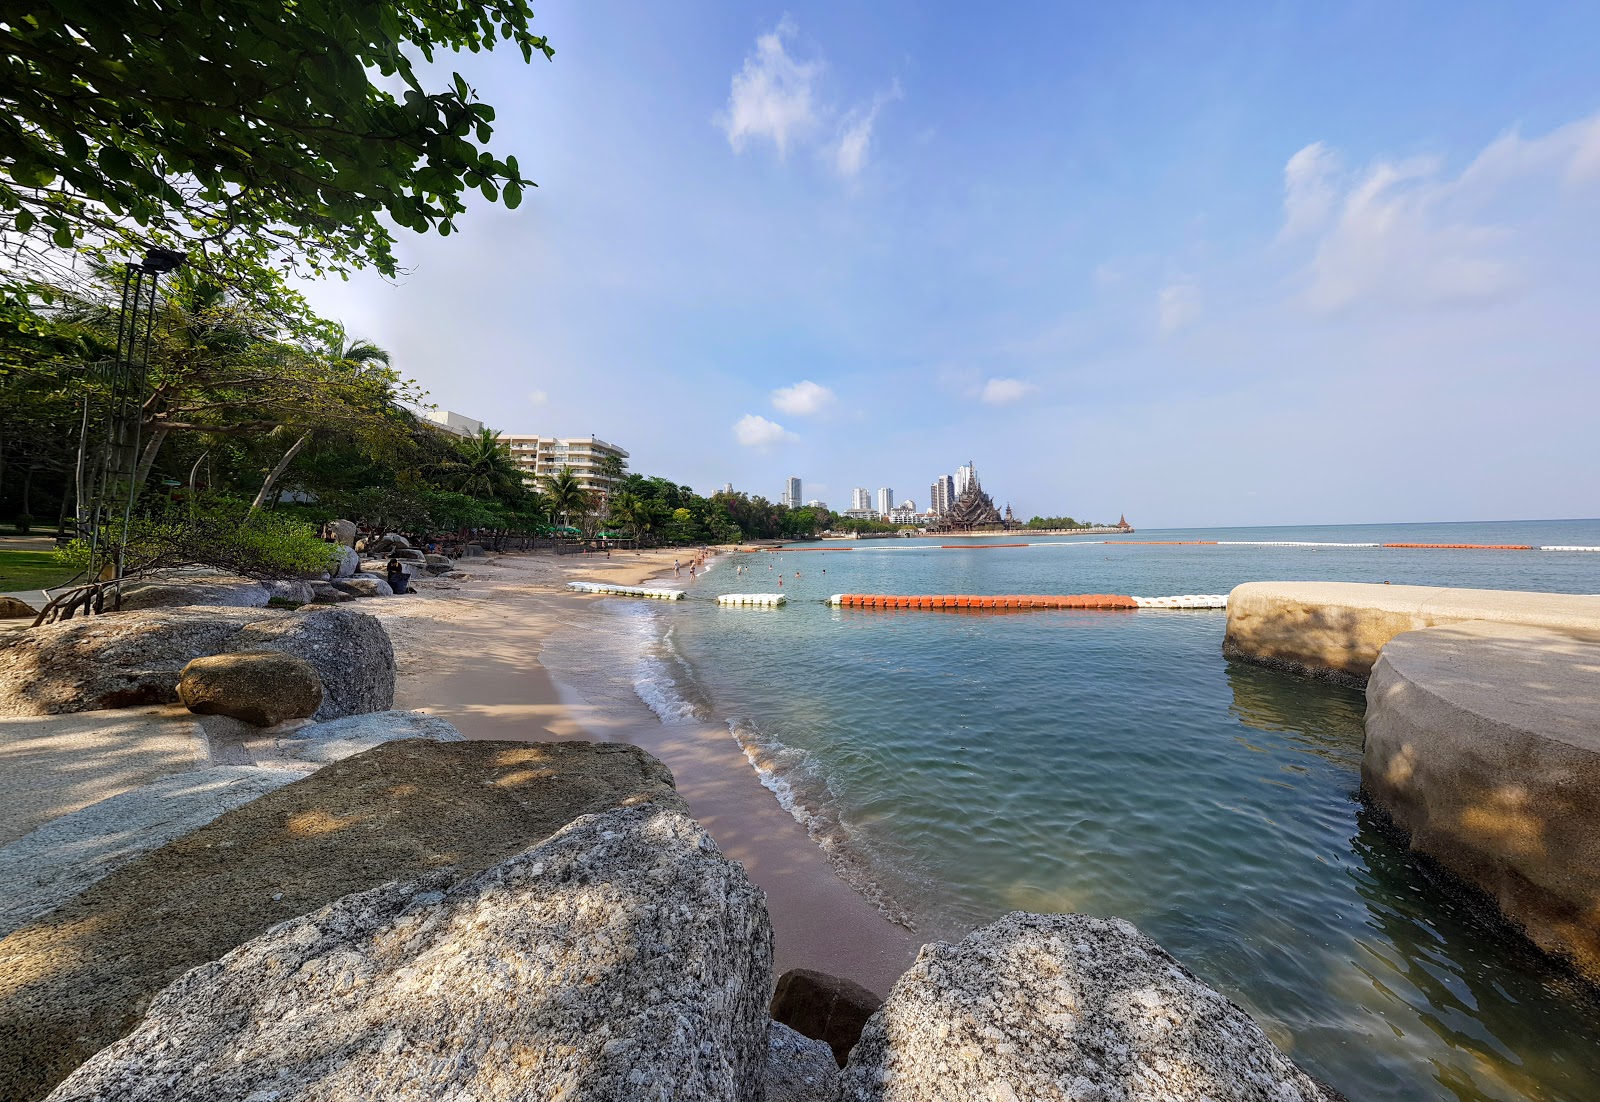 Fotografie cu Wong Prachan Beach - locul popular printre cunoscătorii de relaxare